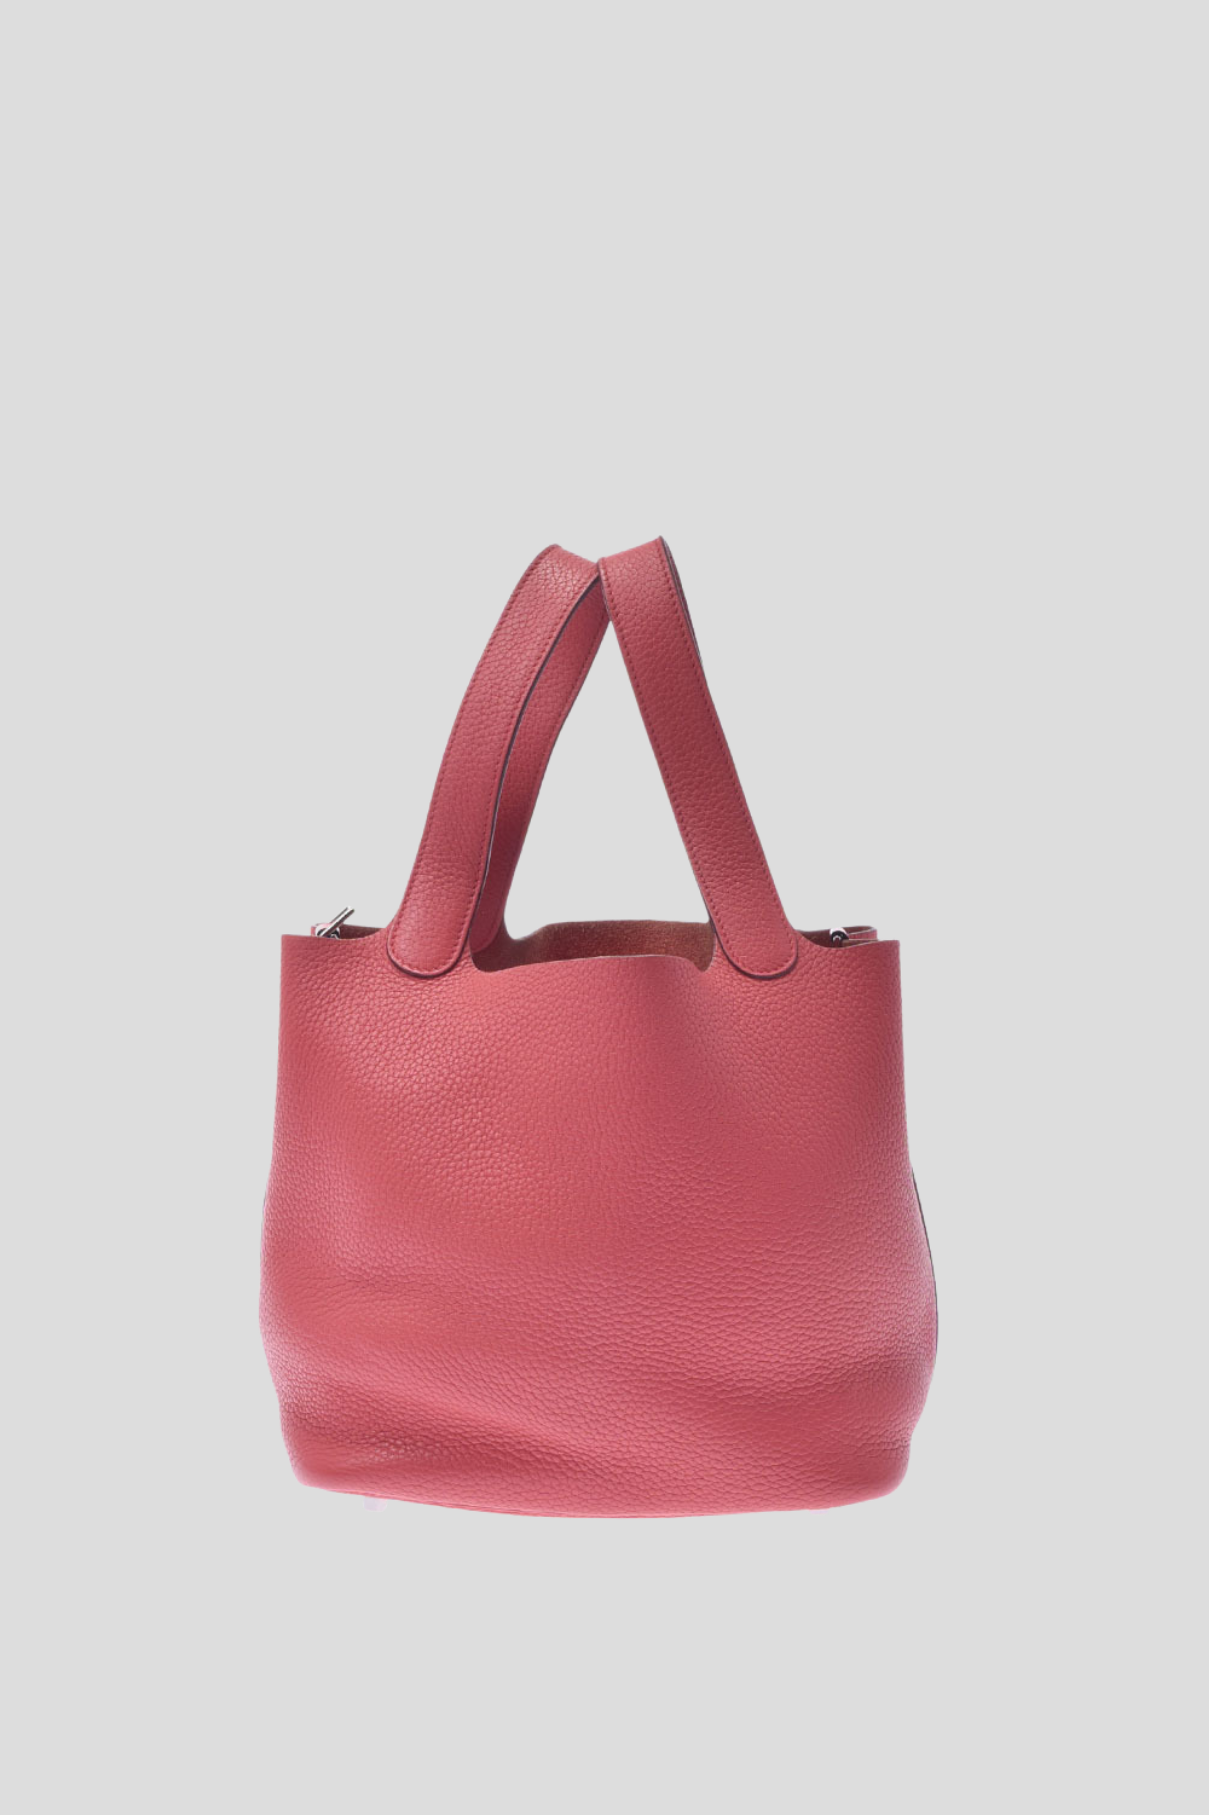 Hermès Birkin 25 Bag Rose Azalee Swift Pink Leather Palladium